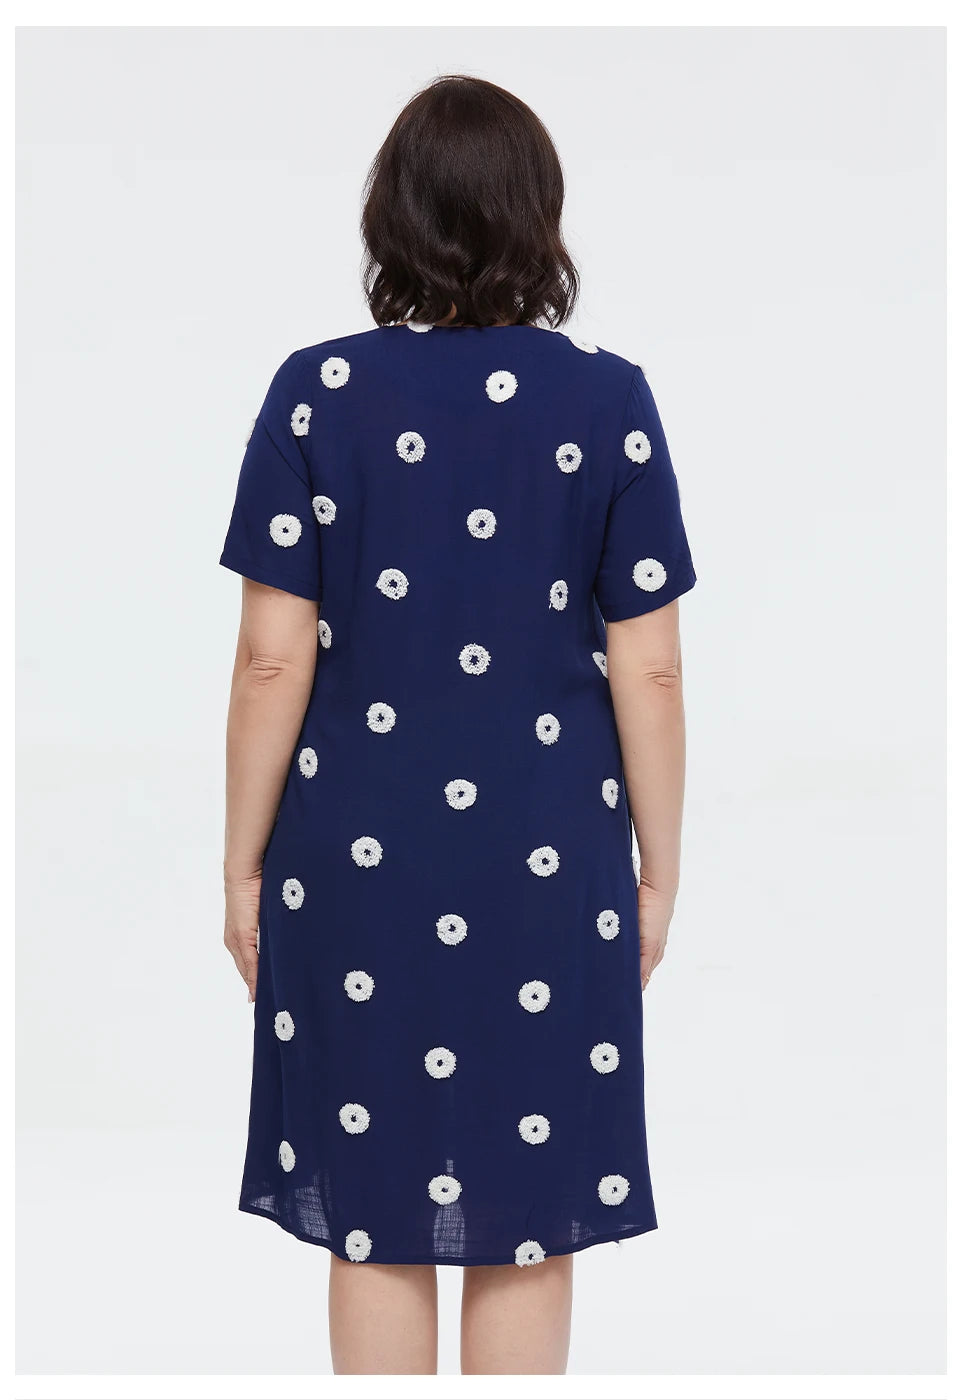 Polka Dot Embroidered Plus Size Women's Dress